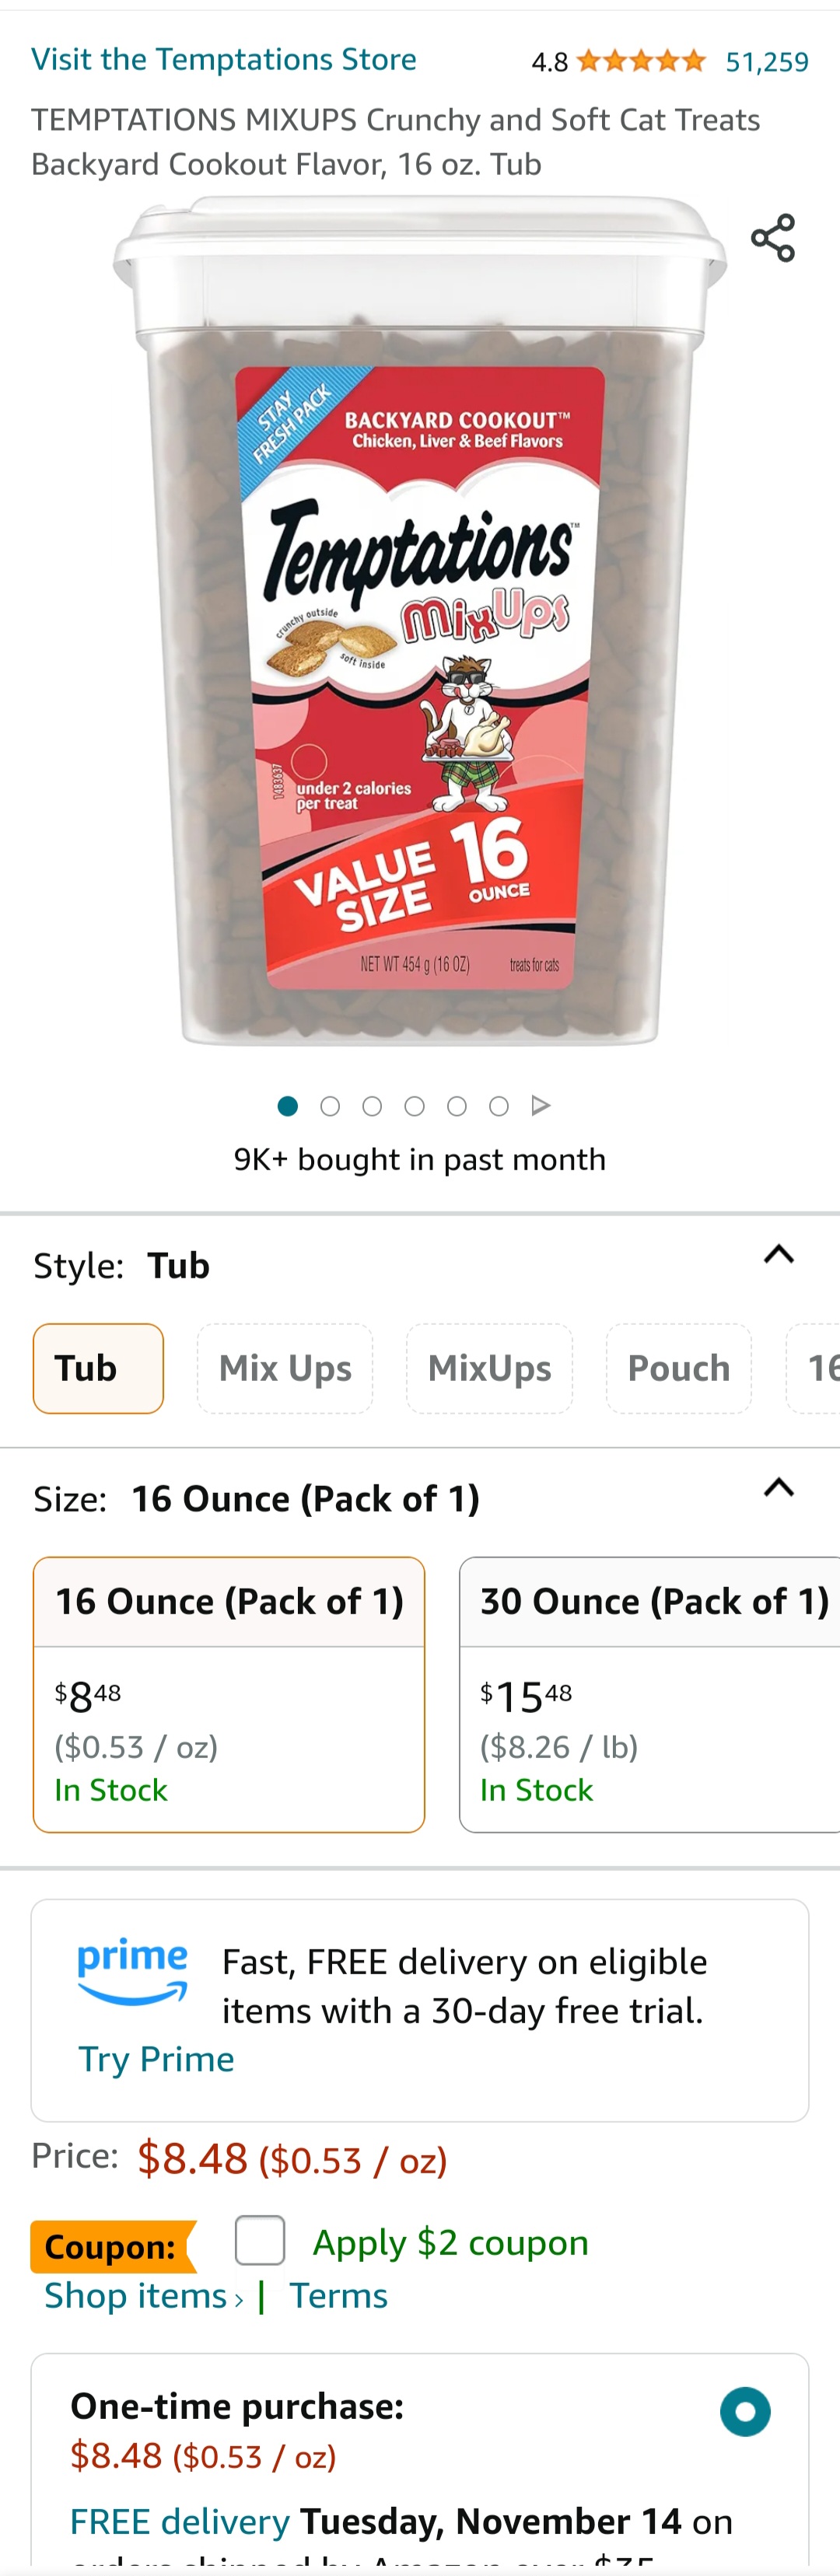 Amazon.com : TEMPTATIONS MIXUPS Crunchy and Soft Cat Treats Backyard Cookout Flavor, 30 oz. Tub : Pet Supplies